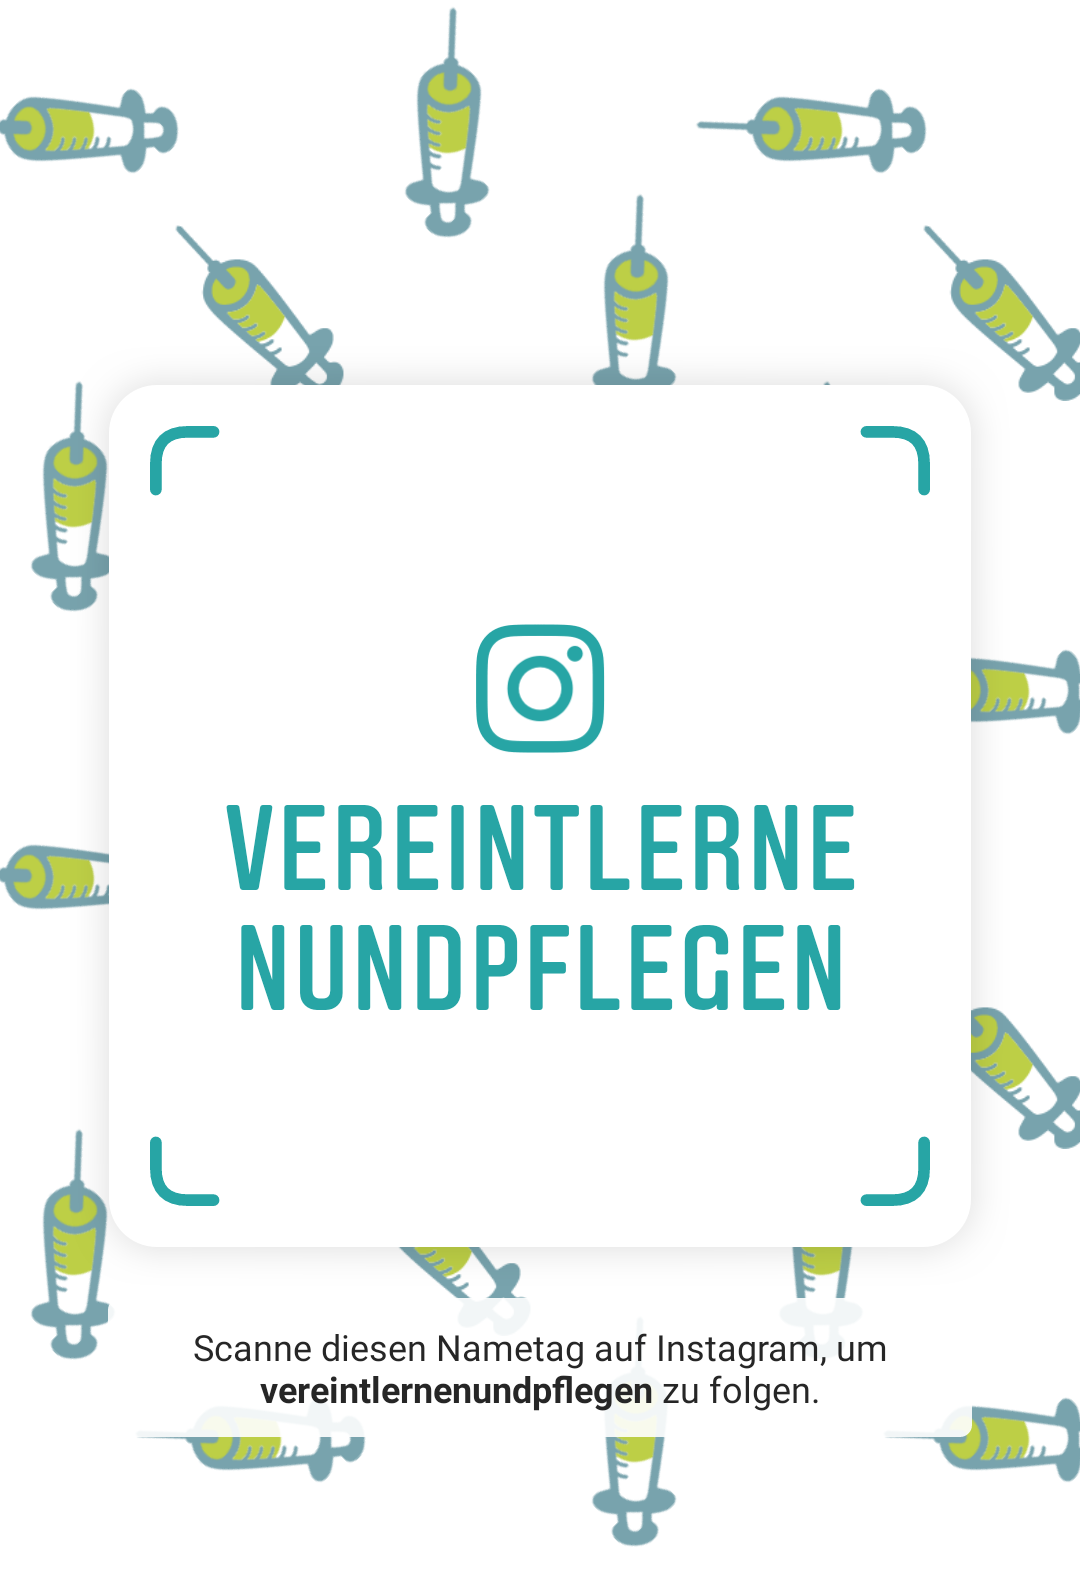 VerLePe goes Instagram